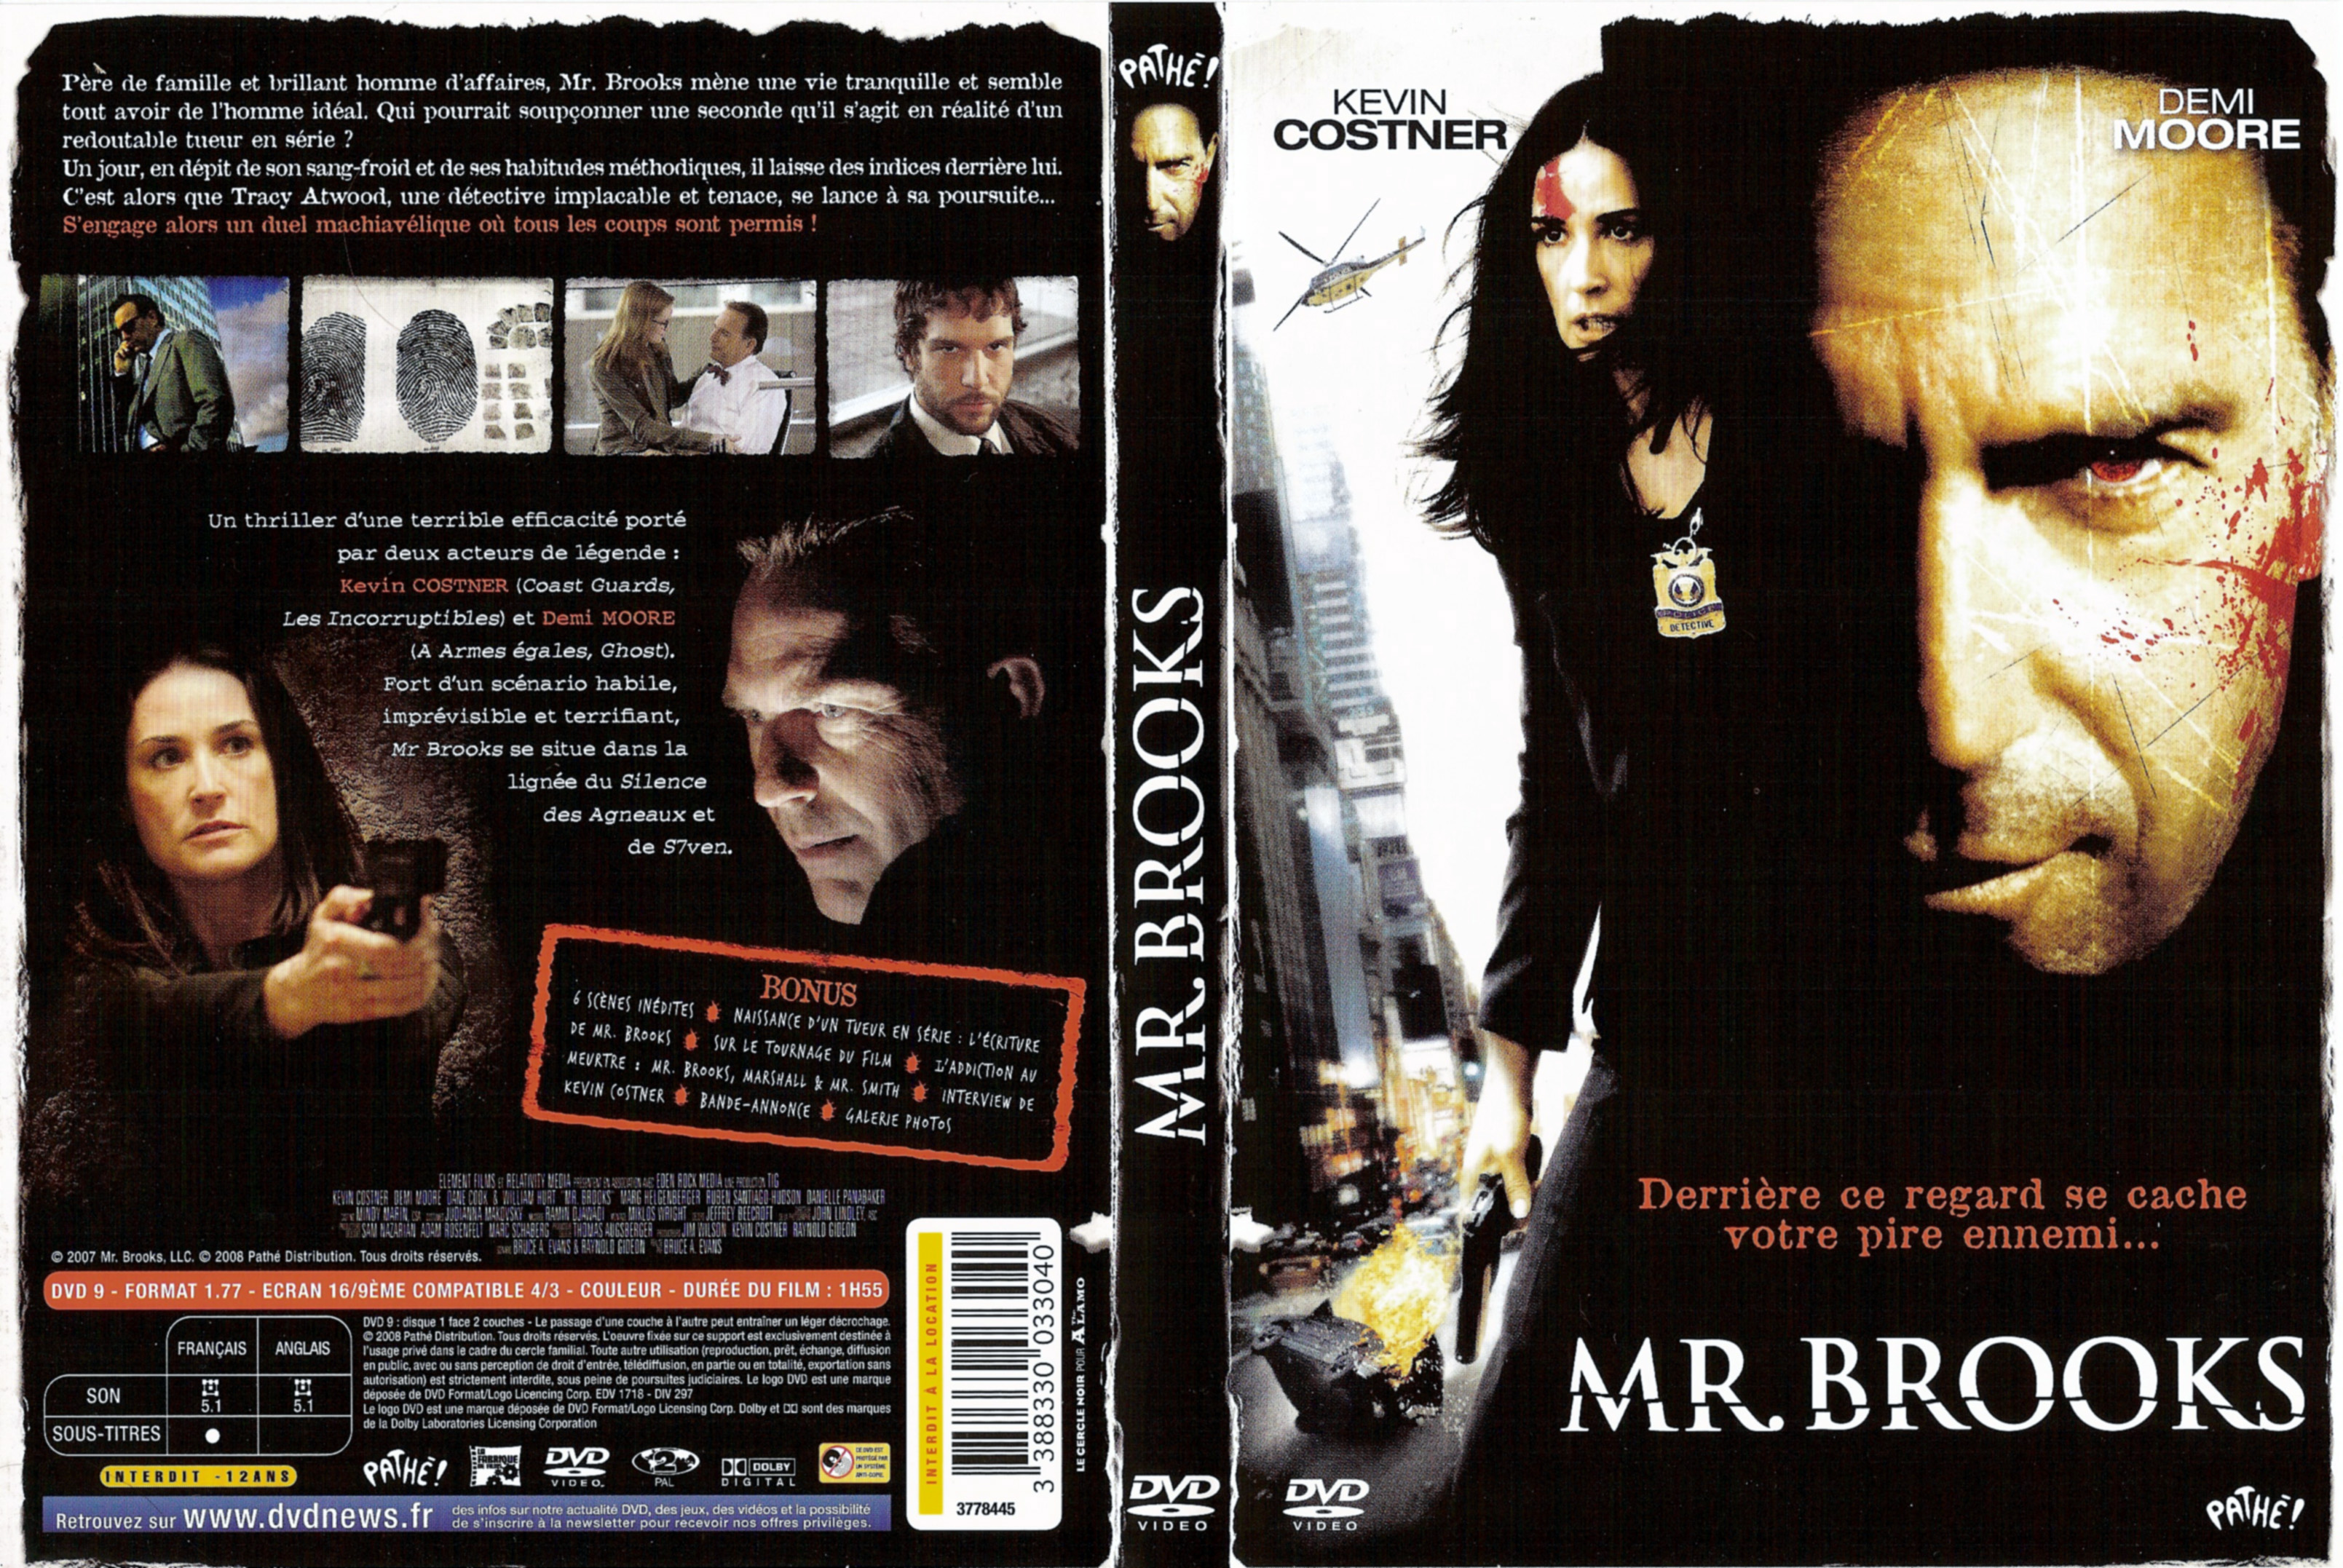 Jaquette DVD Mr Brooks